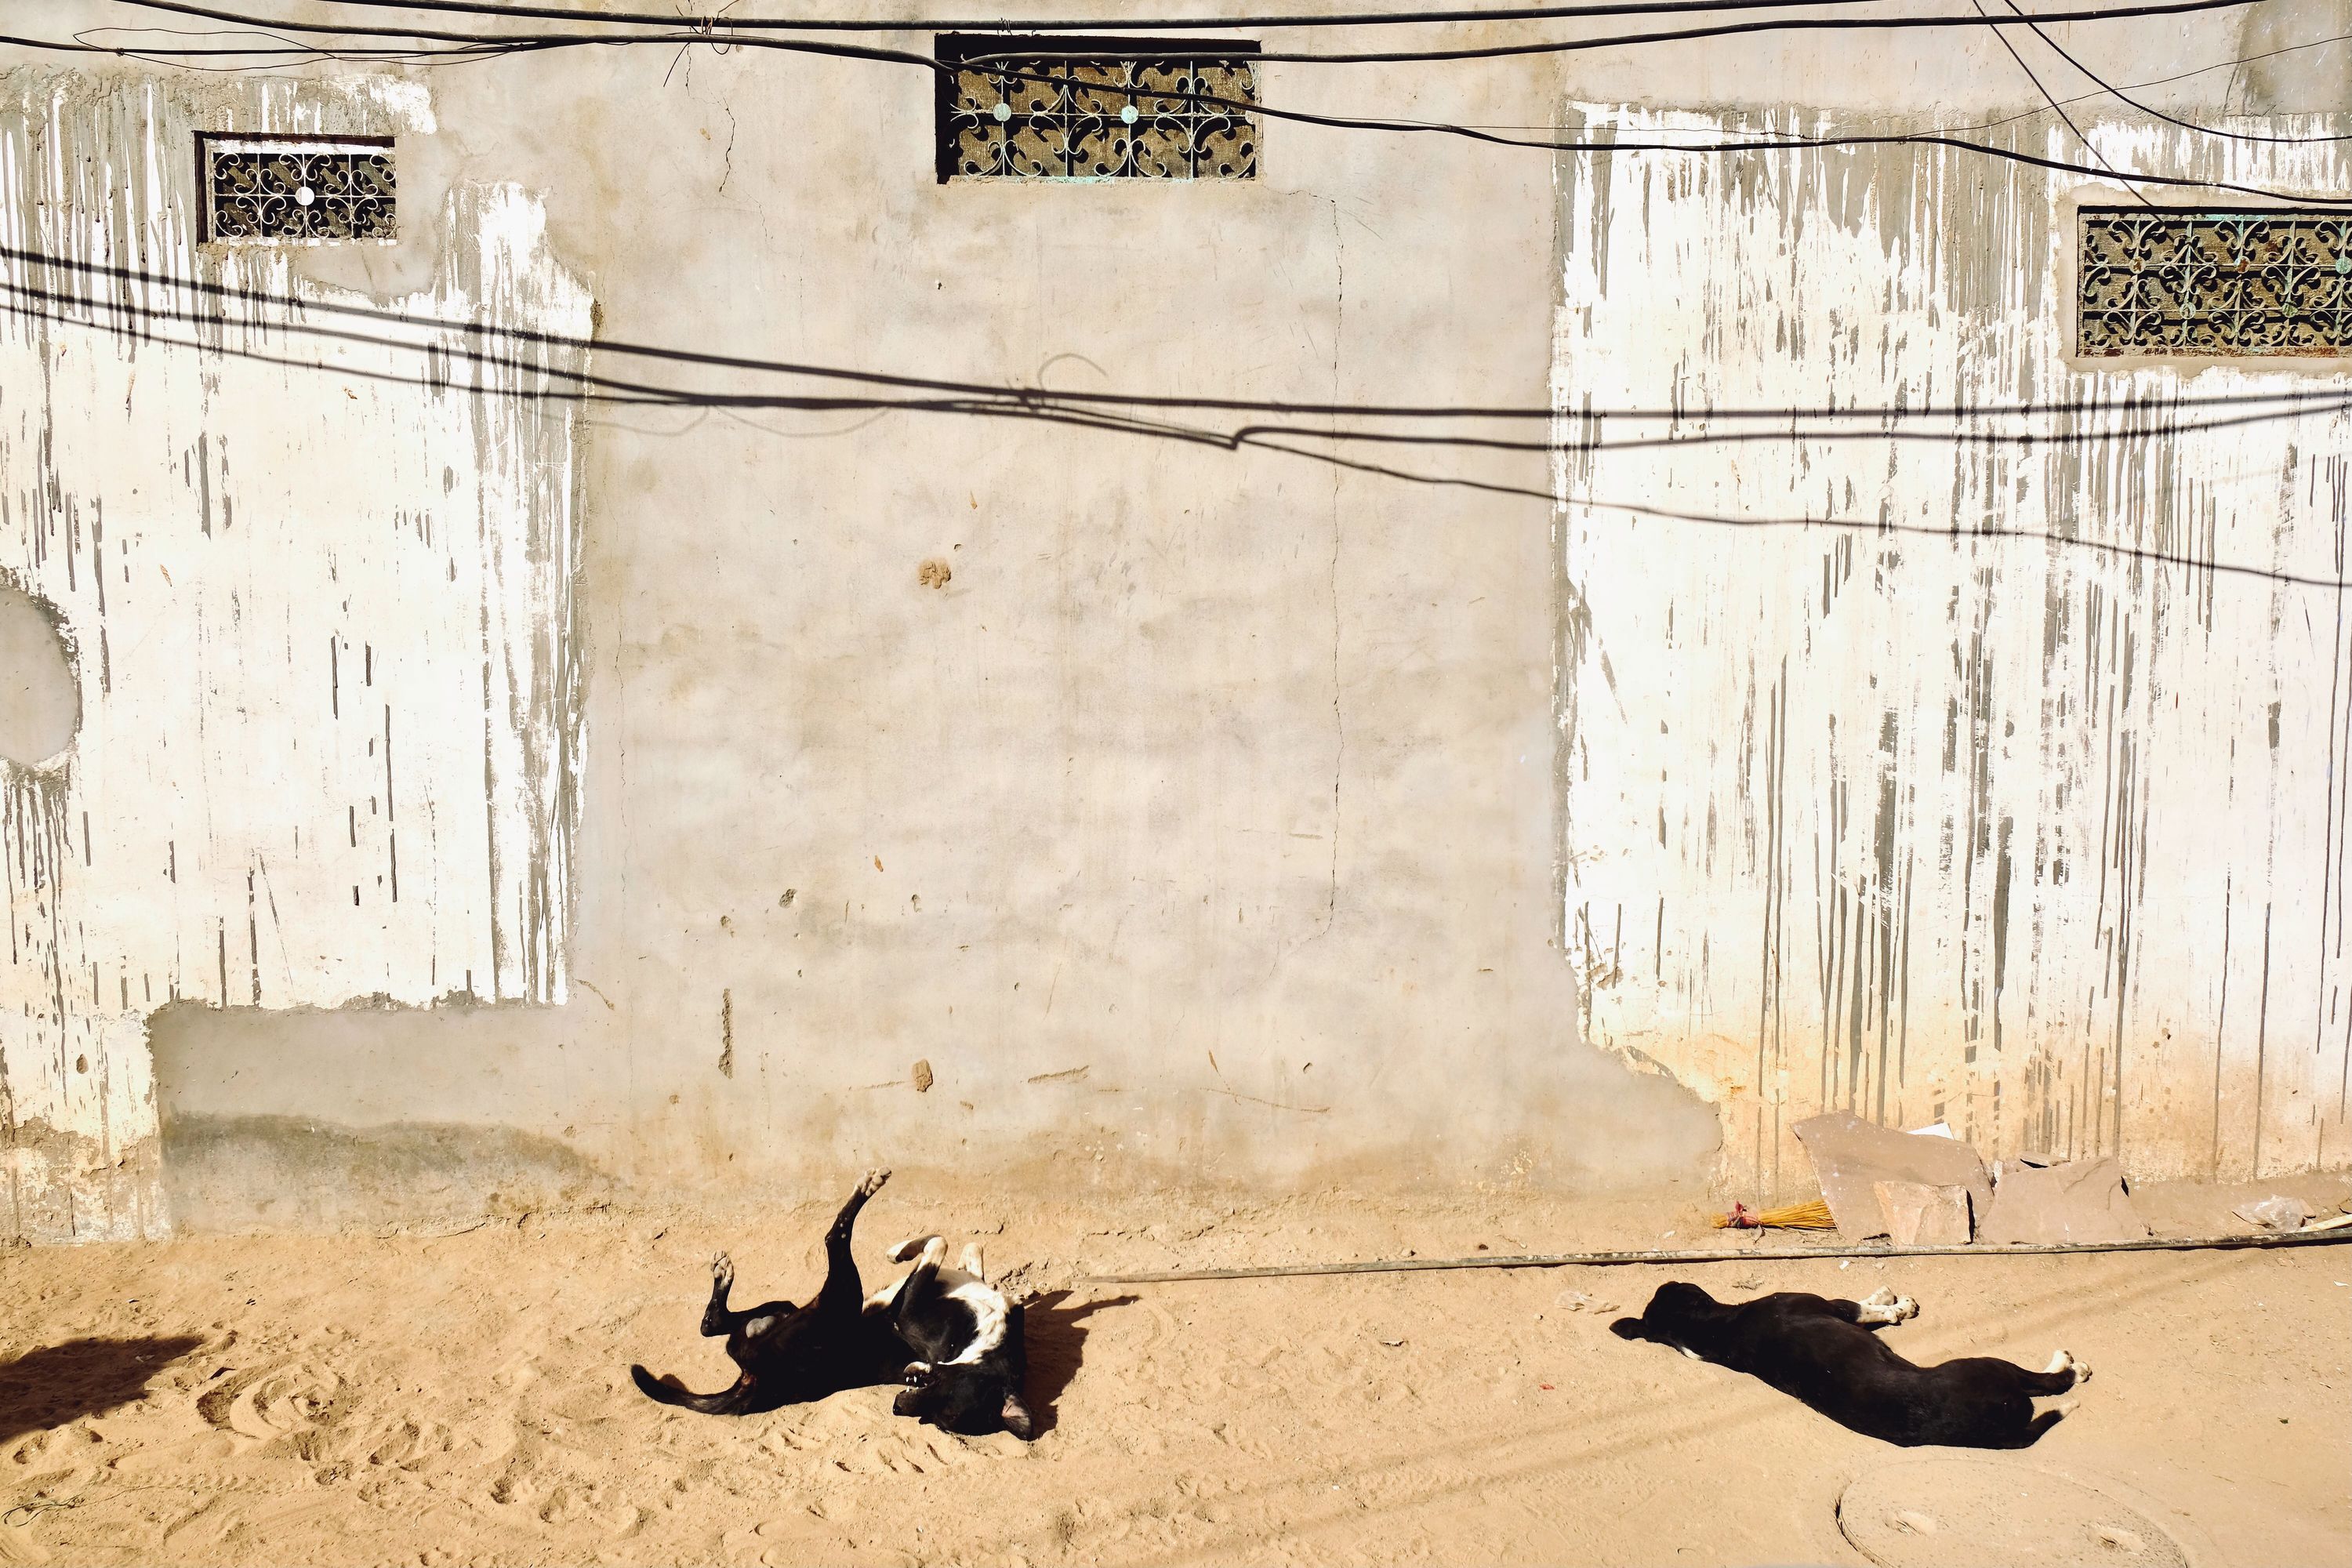 Street dogs enjoying the winter sun in Jodhpur, Rajasthan, India. December 2020.